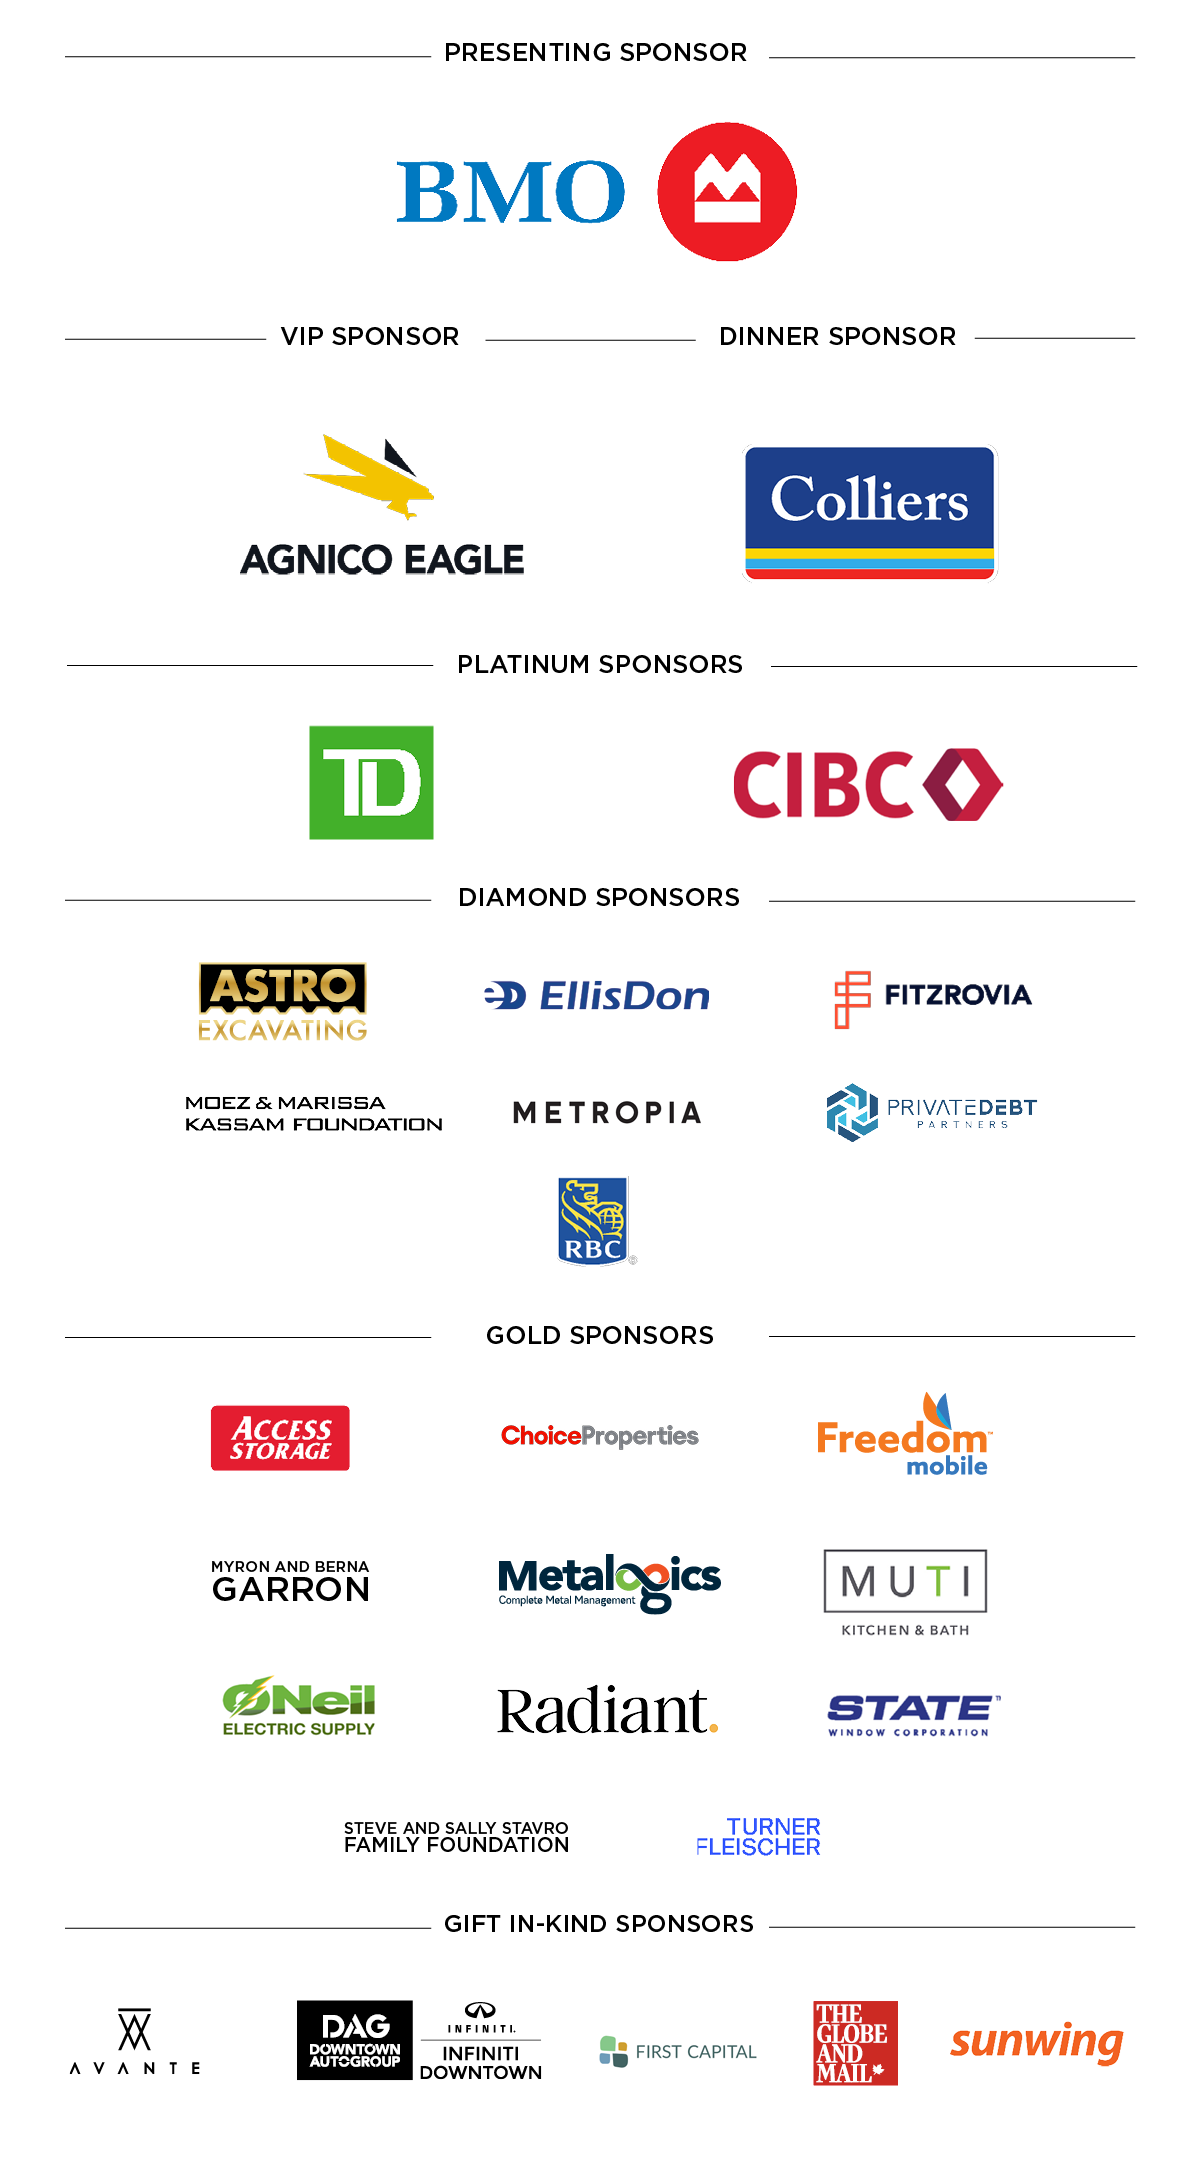 Sponsor logos including presenting sponsor Bank of Montreal